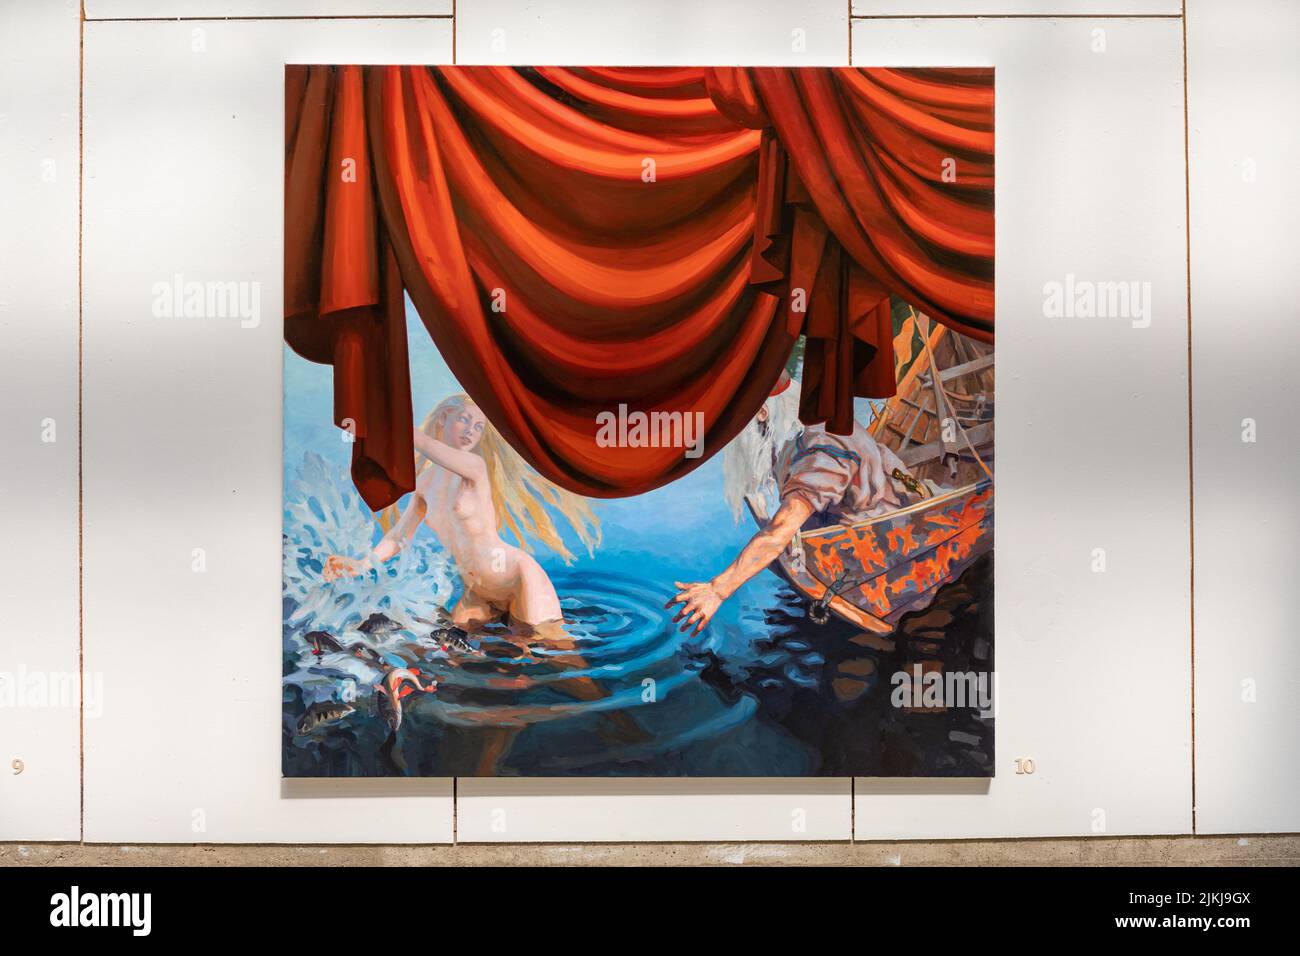 Para uso editorial solamente: Caravaggion kangas - Aino. Pintura al óleo sobre lienzo de Markku Laakso (2021) en la exposición de verano de Taidekeskus Purnu en Orivesi. Foto de stock